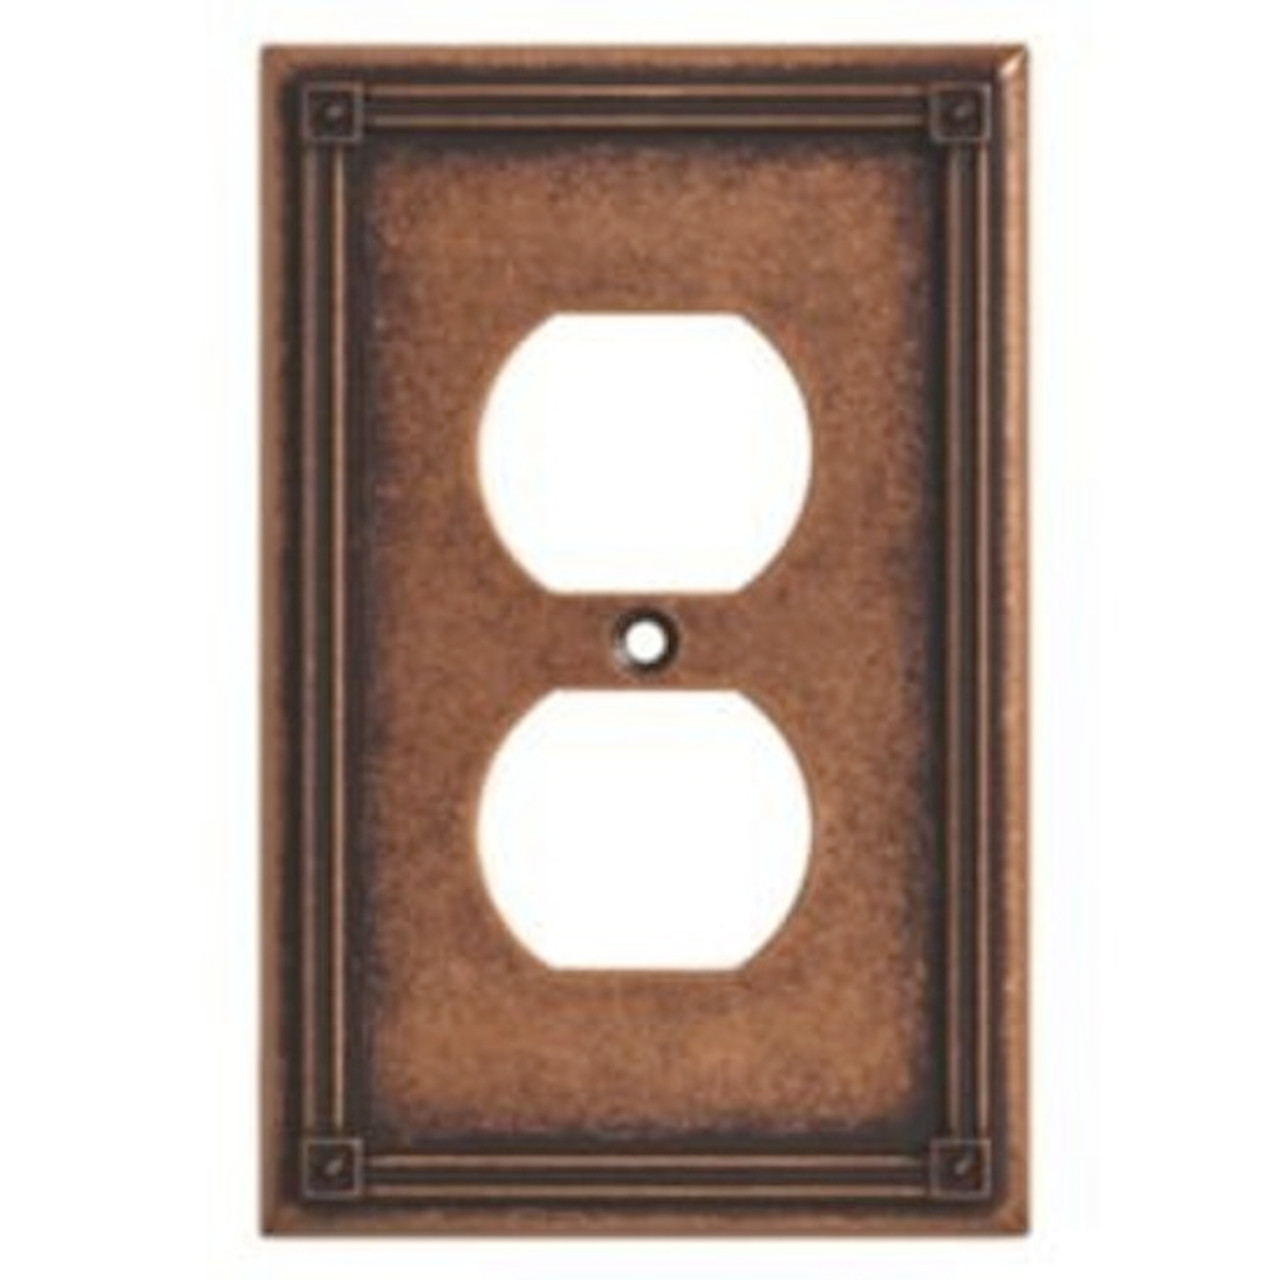 135766 Ruston Sponged Copper Single Duplex Switch Cover Plate